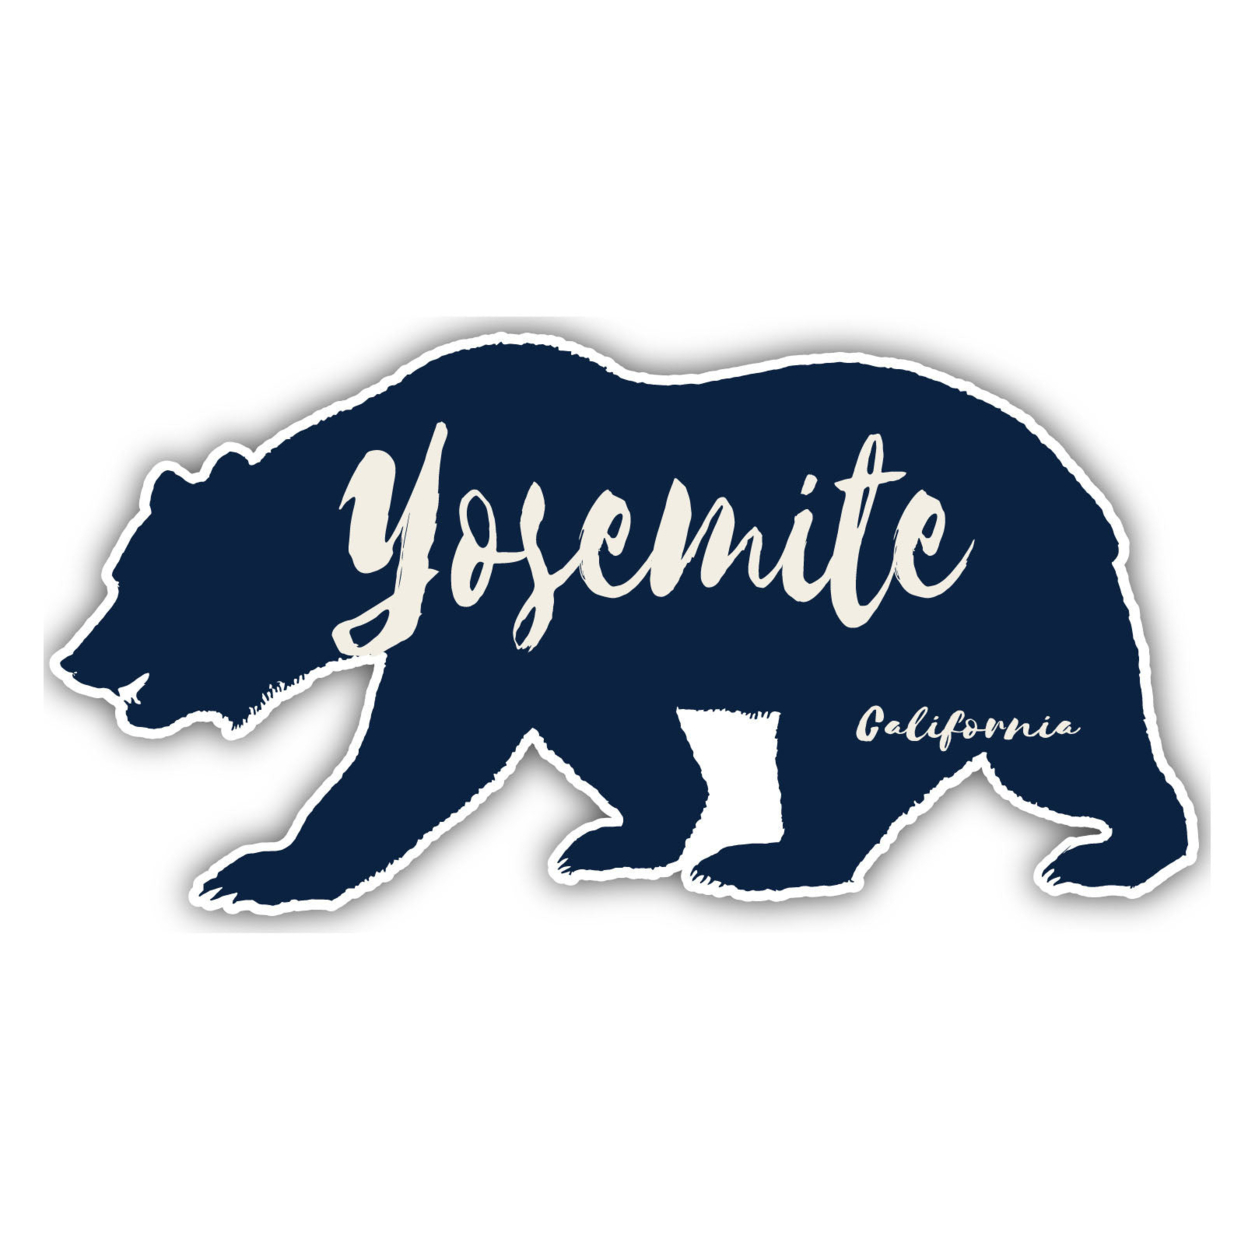 Yosemite California Souvenir Decorative Stickers (Choose Theme And Size) - Single Unit, 4-Inch, Bear